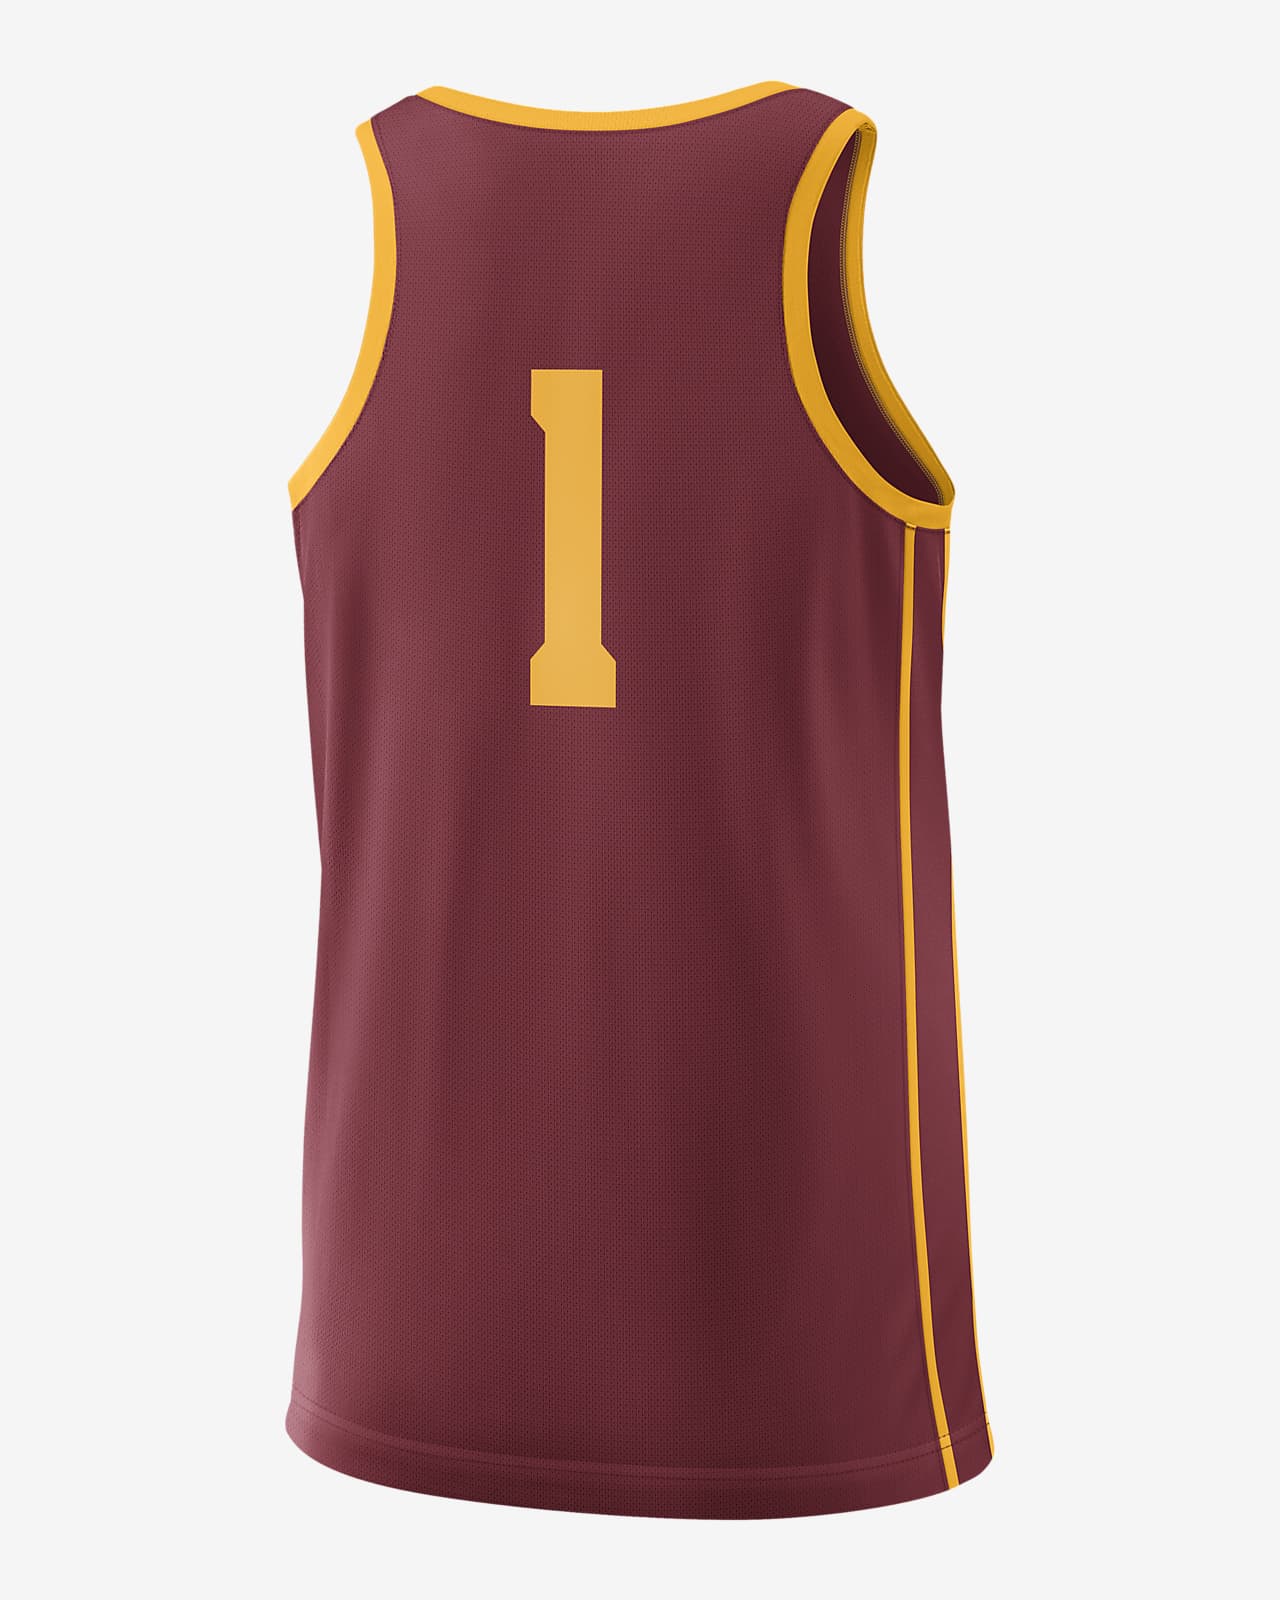 Basketball jersey or sport uniform, shorts, socks template for